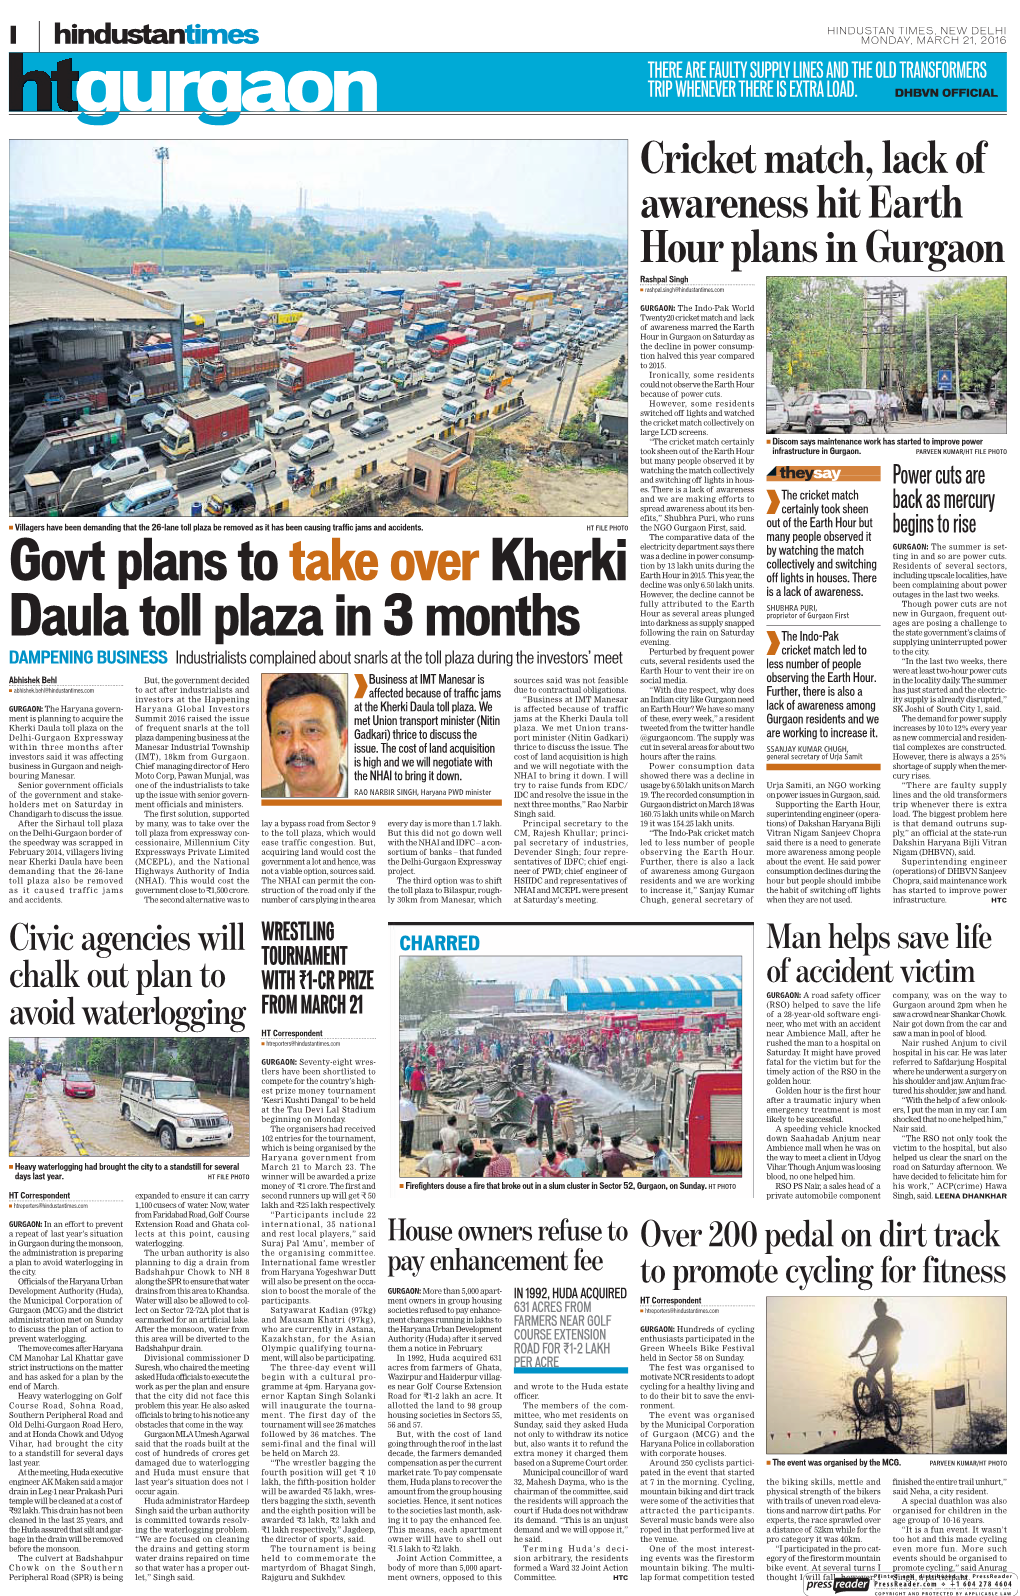 Govt Plans to Take Overkherki Daula Toll Plaza in 3 Months